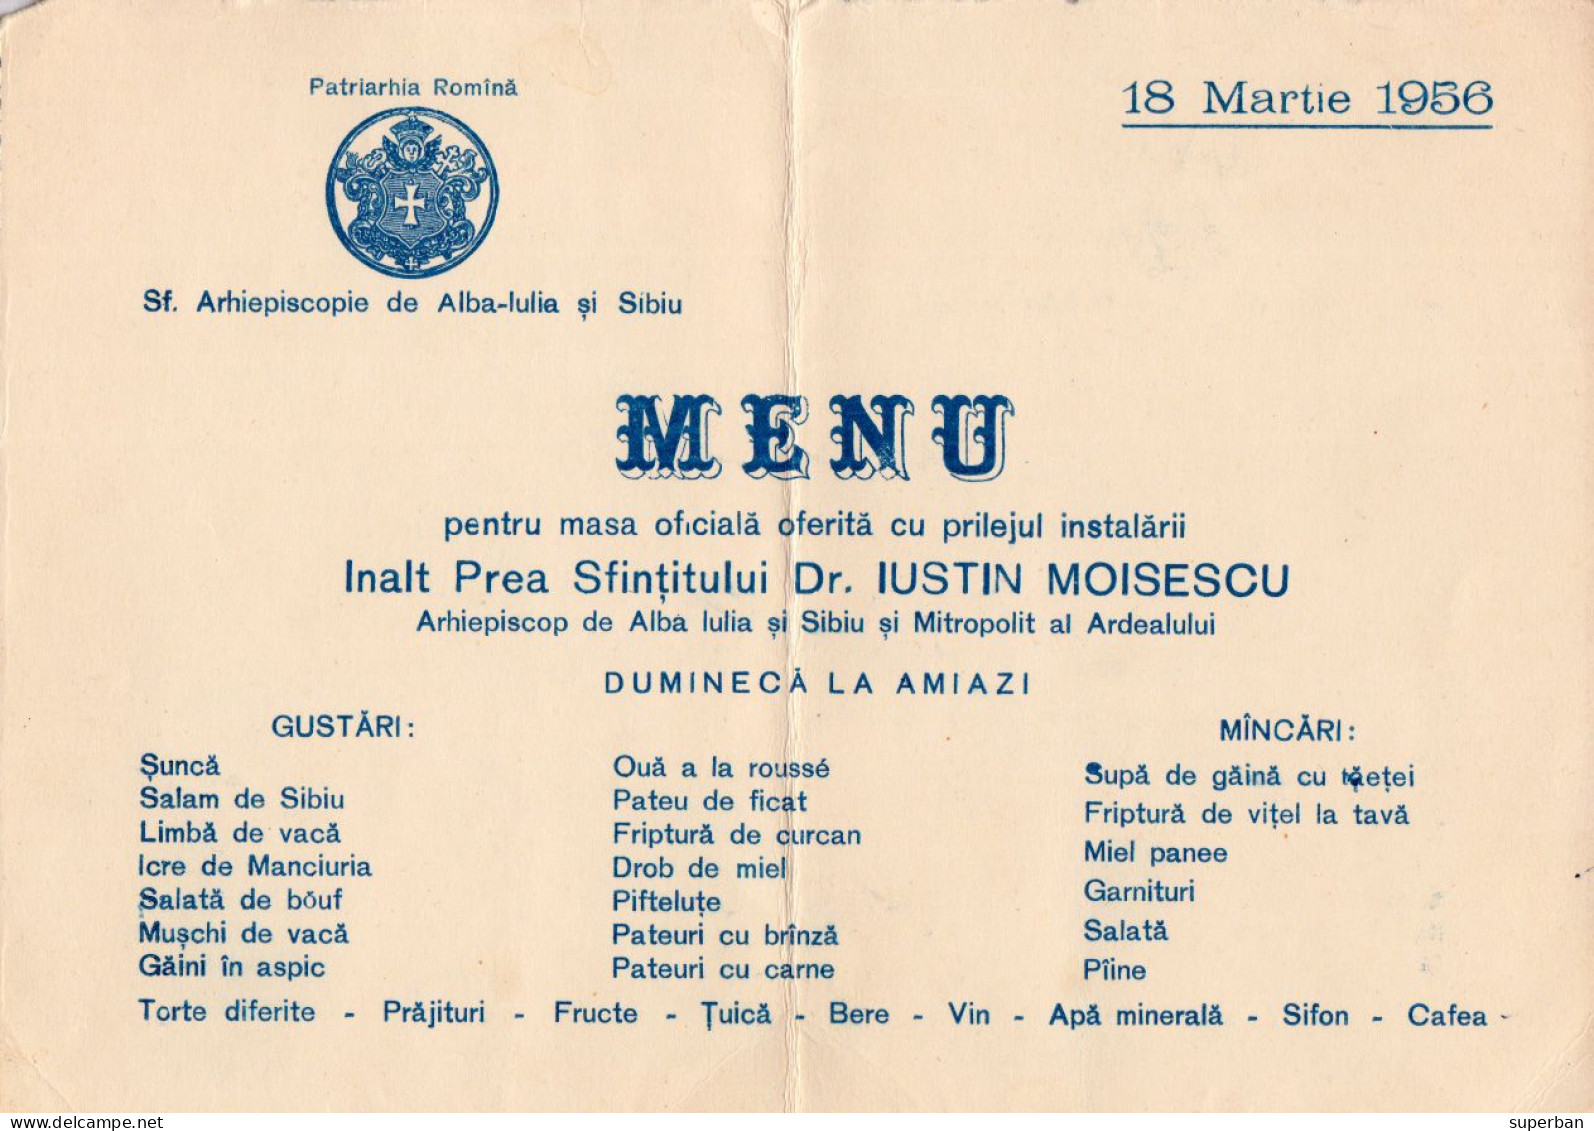 ROUMANIE / ROMANIA : MENU - INSTALAREA Dr. IUSTIN MOISESCU - ARHIEPISCOP De ALBA IULIA Si SIBIU - 18 MARTIE 1956 (an495) - Menu